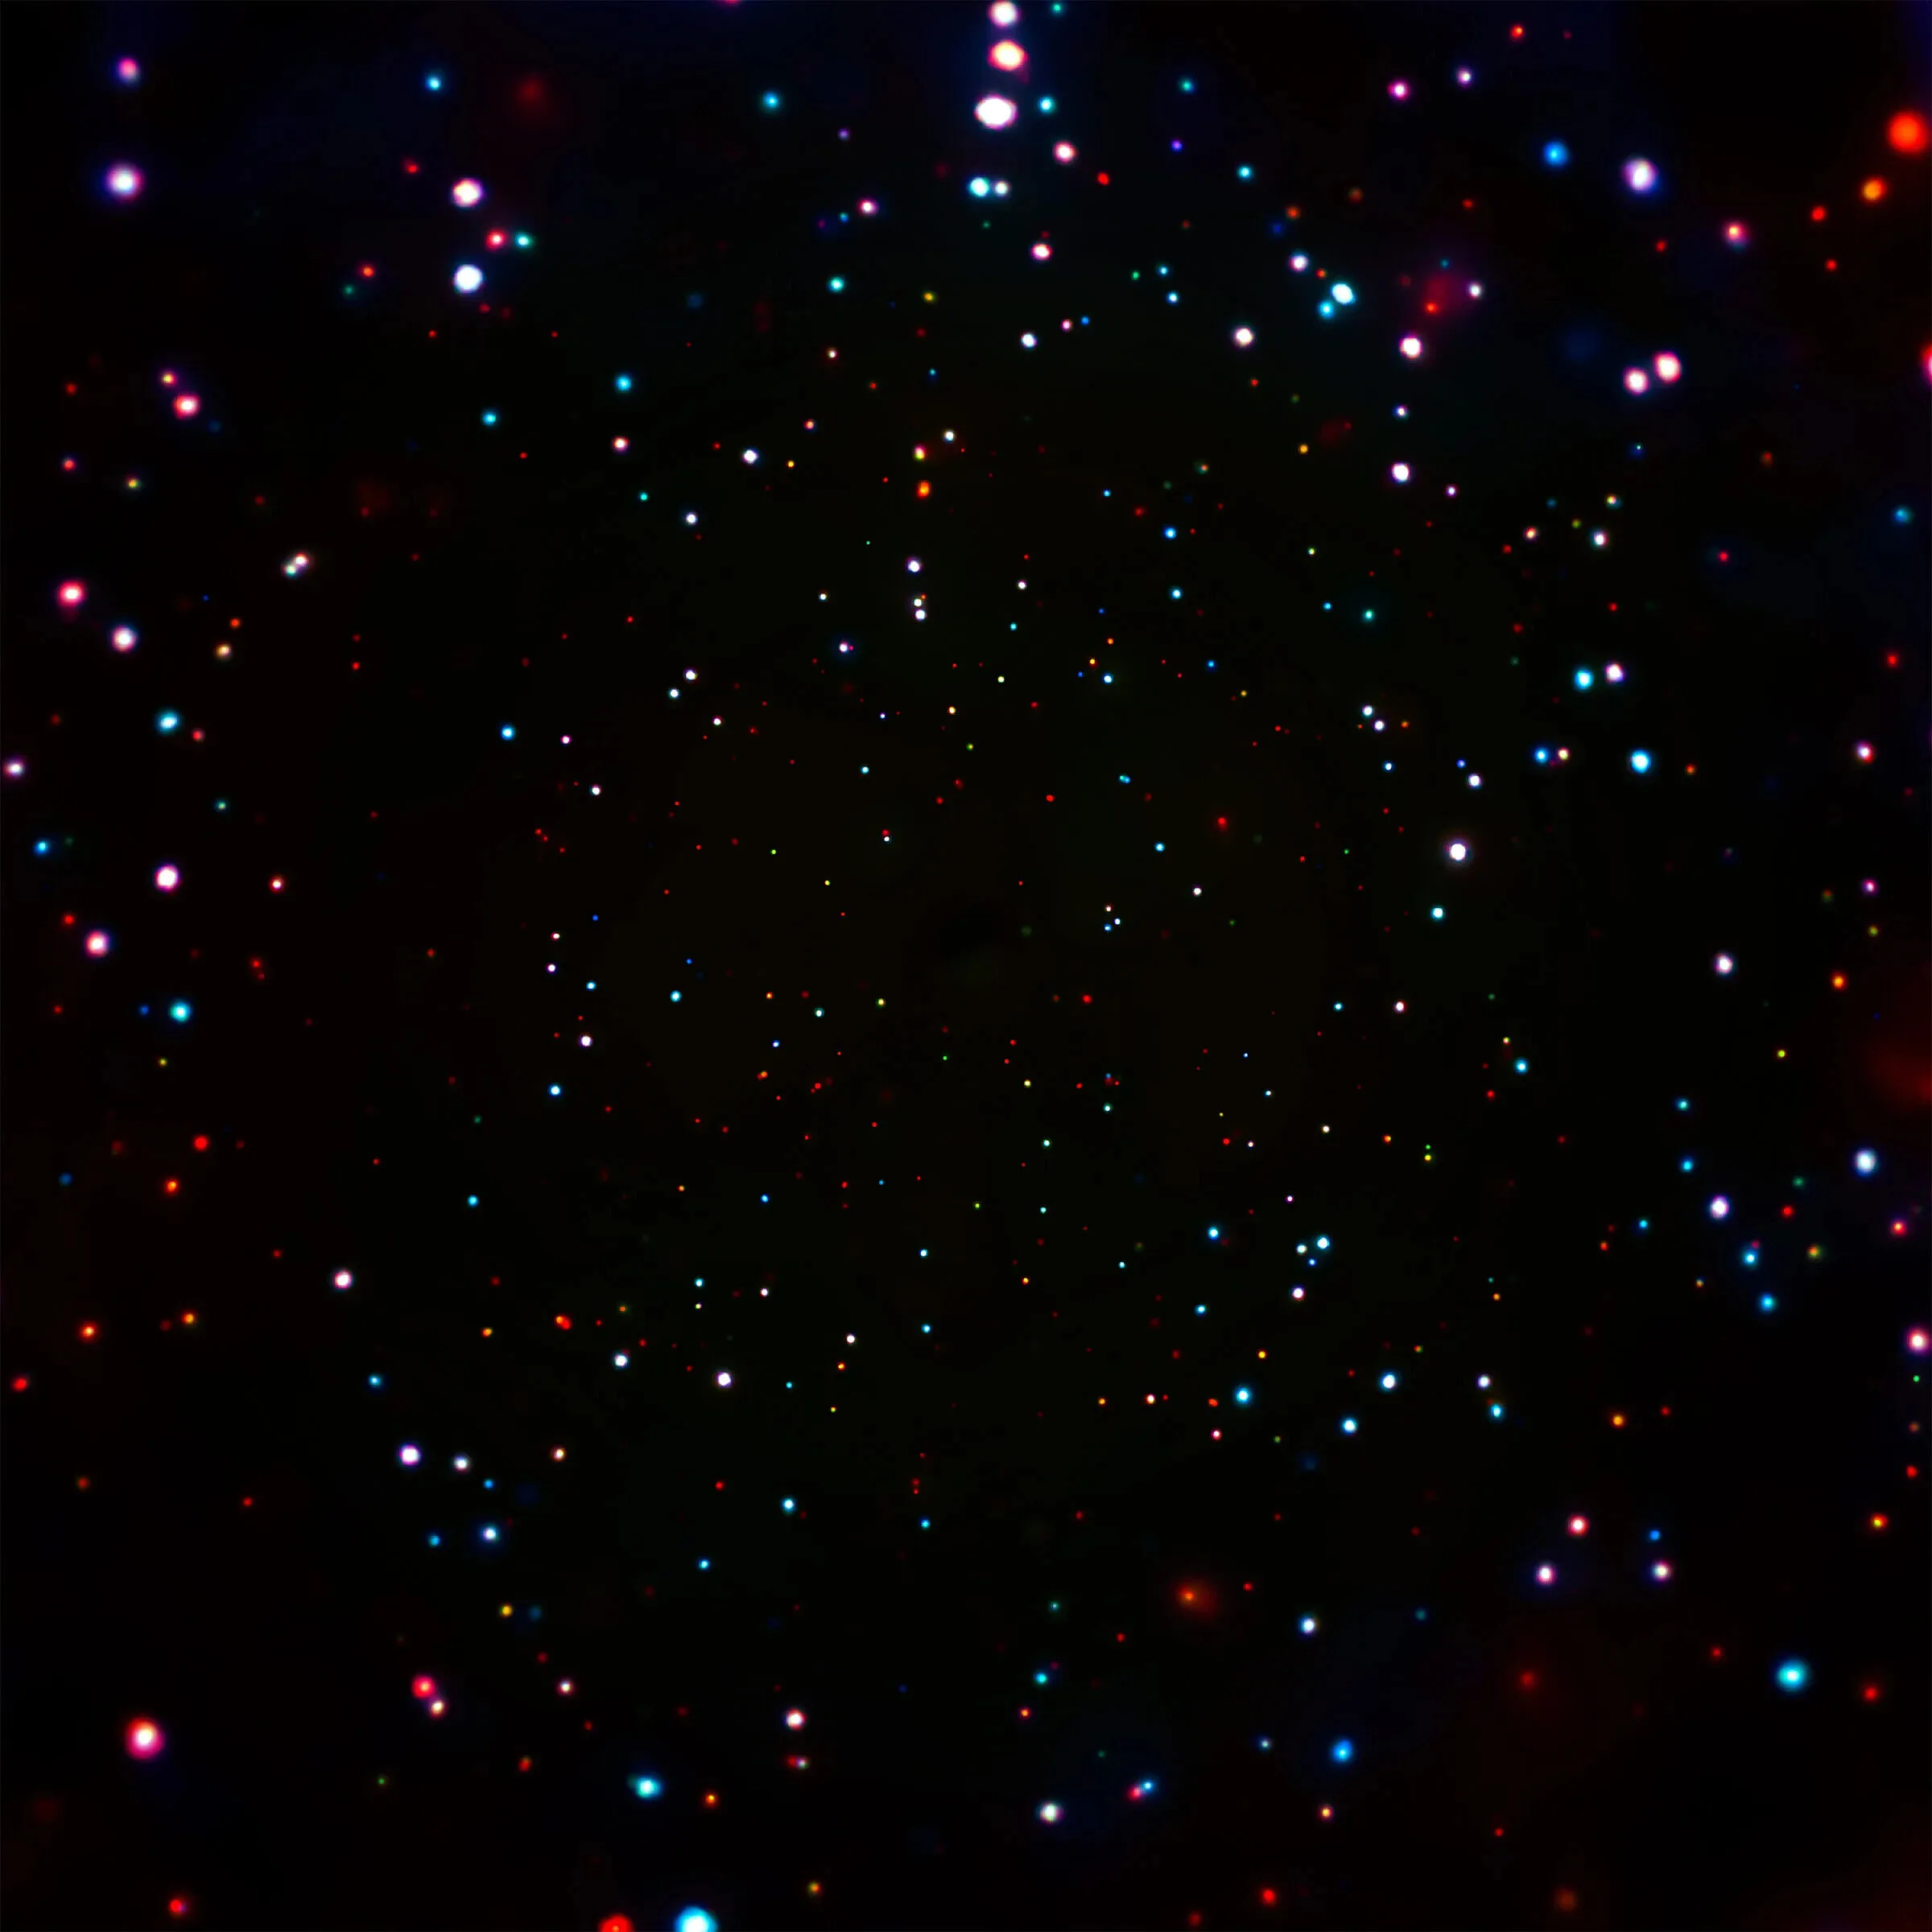 Chandra deep field south